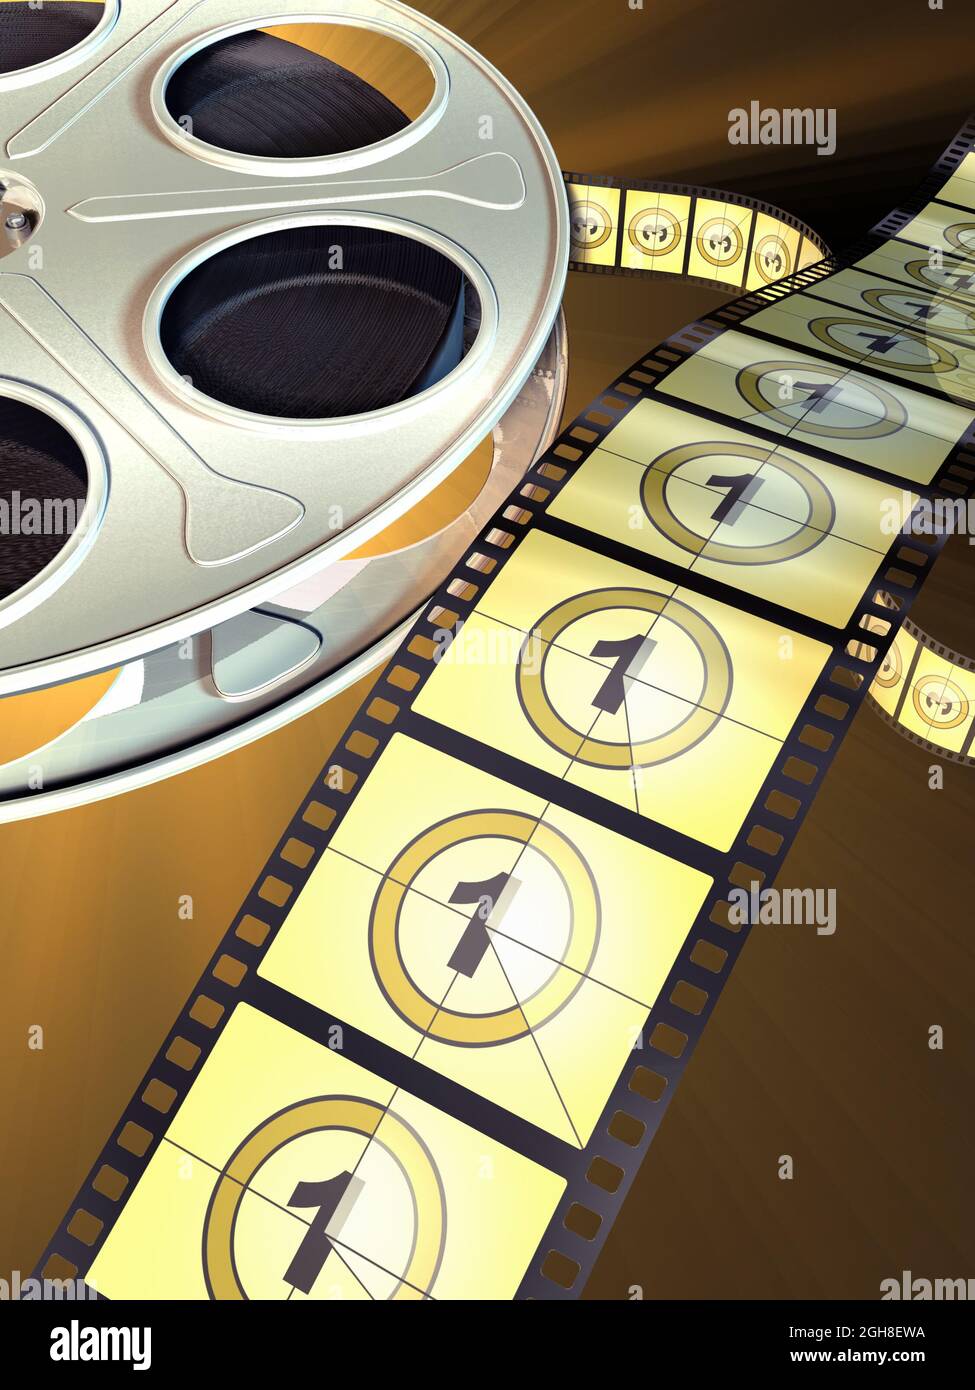 Movie film reel on dark background. Countdown shown on celluloid. Digital illustration. Stock Photo